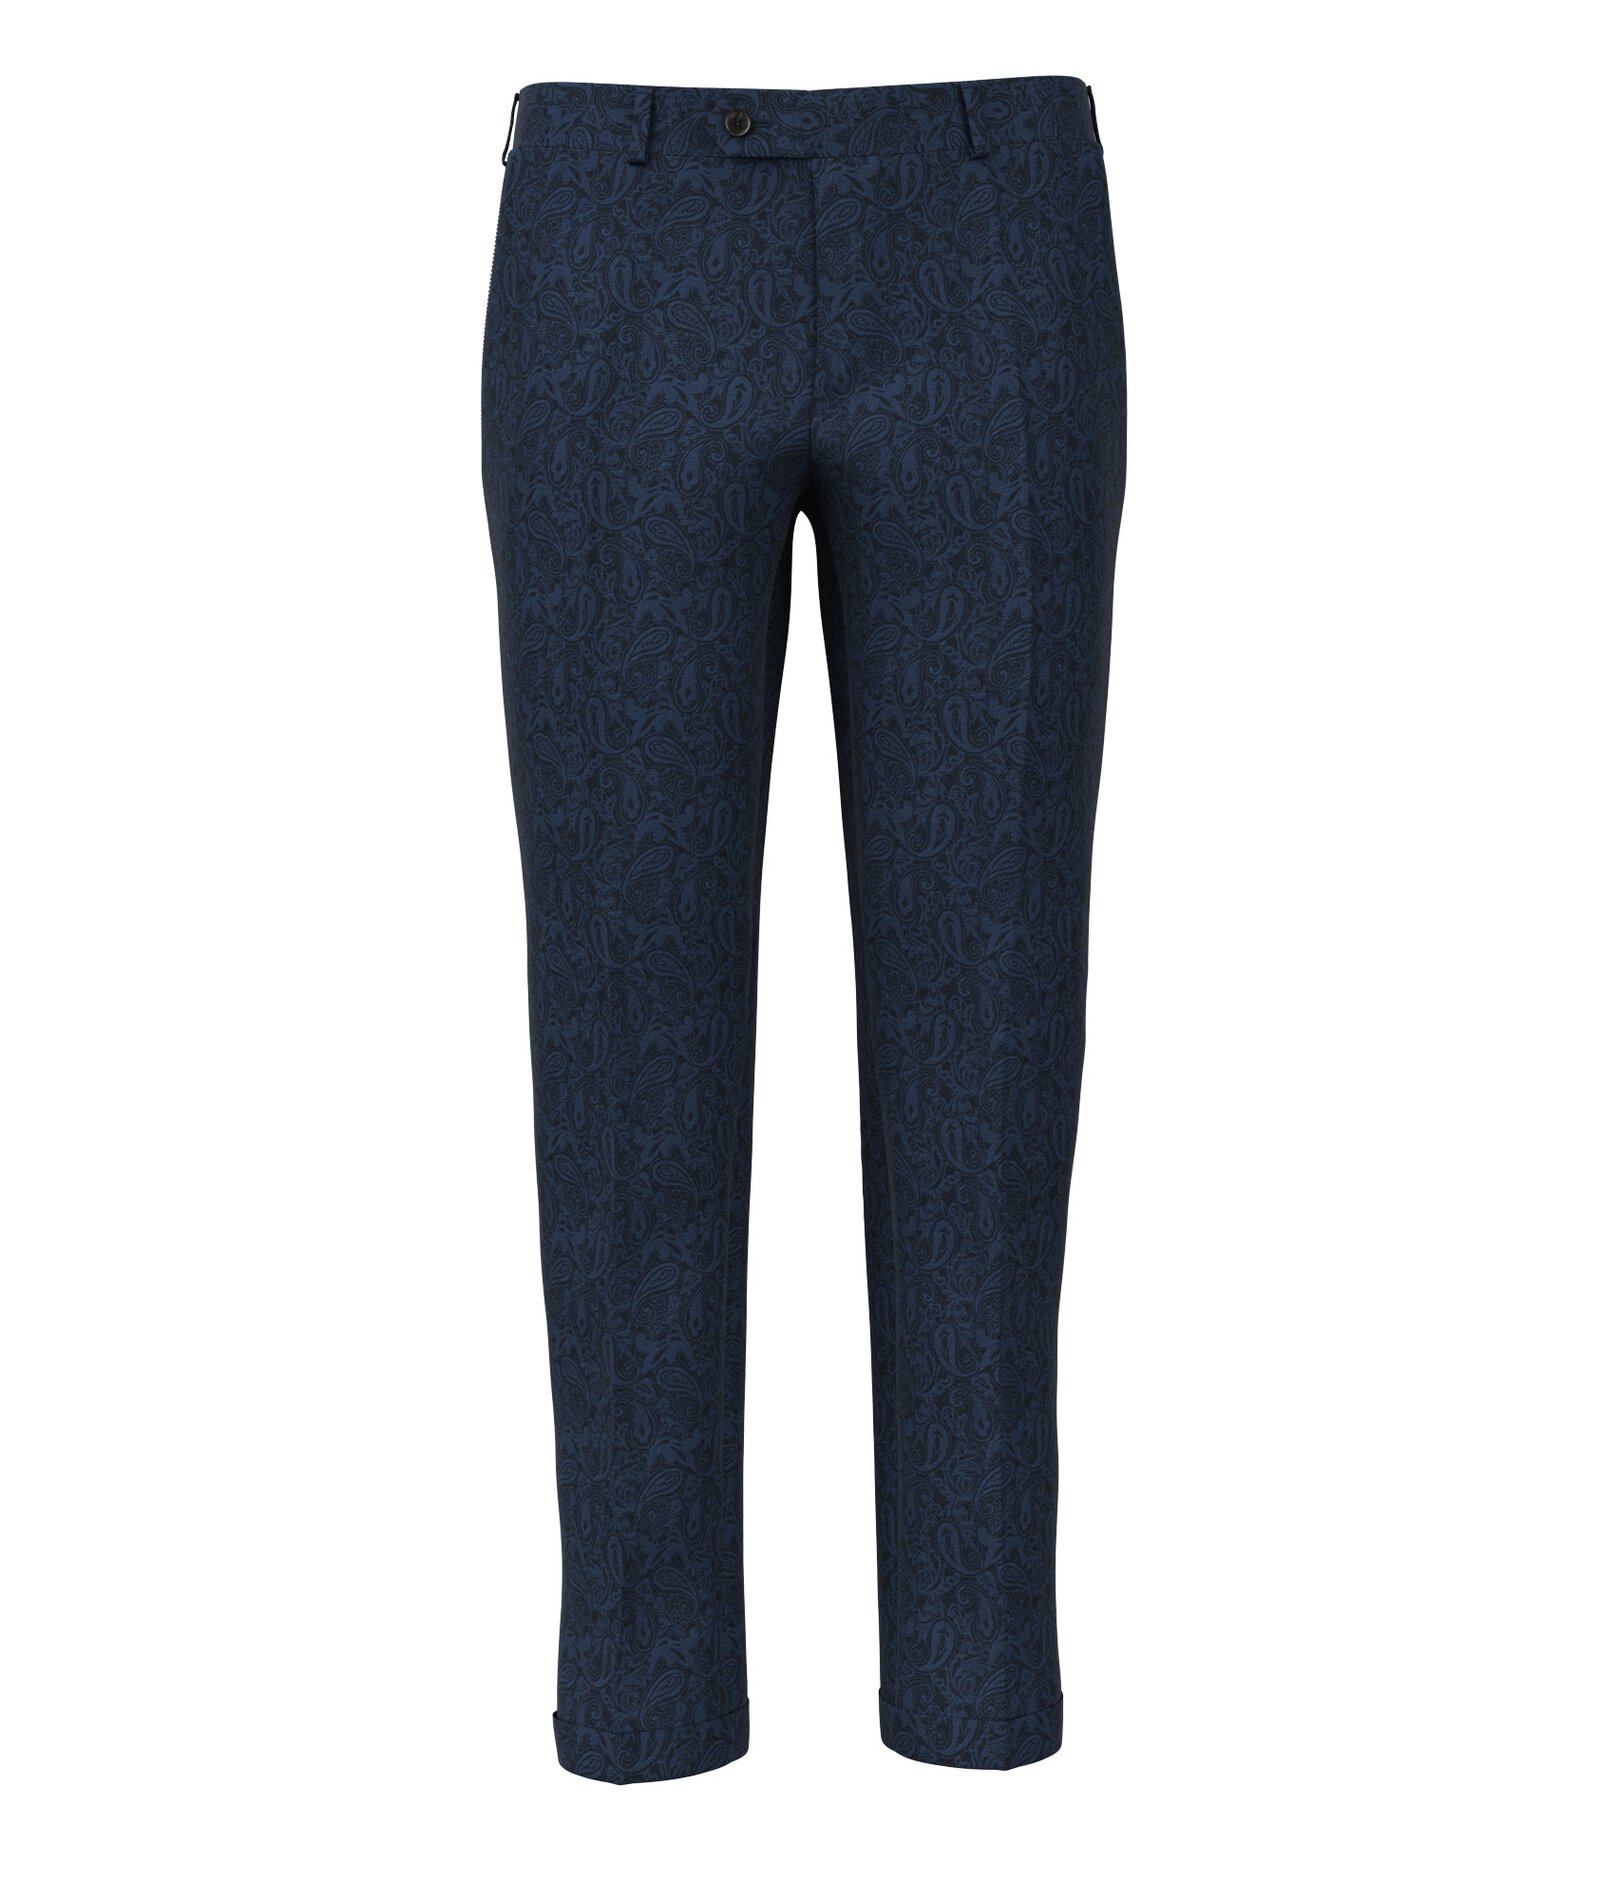 Image of Pantaloni da uomo su misura, Lanificio Zignone, Jaquard Paisley, Quattro Stagioni | Lanieri